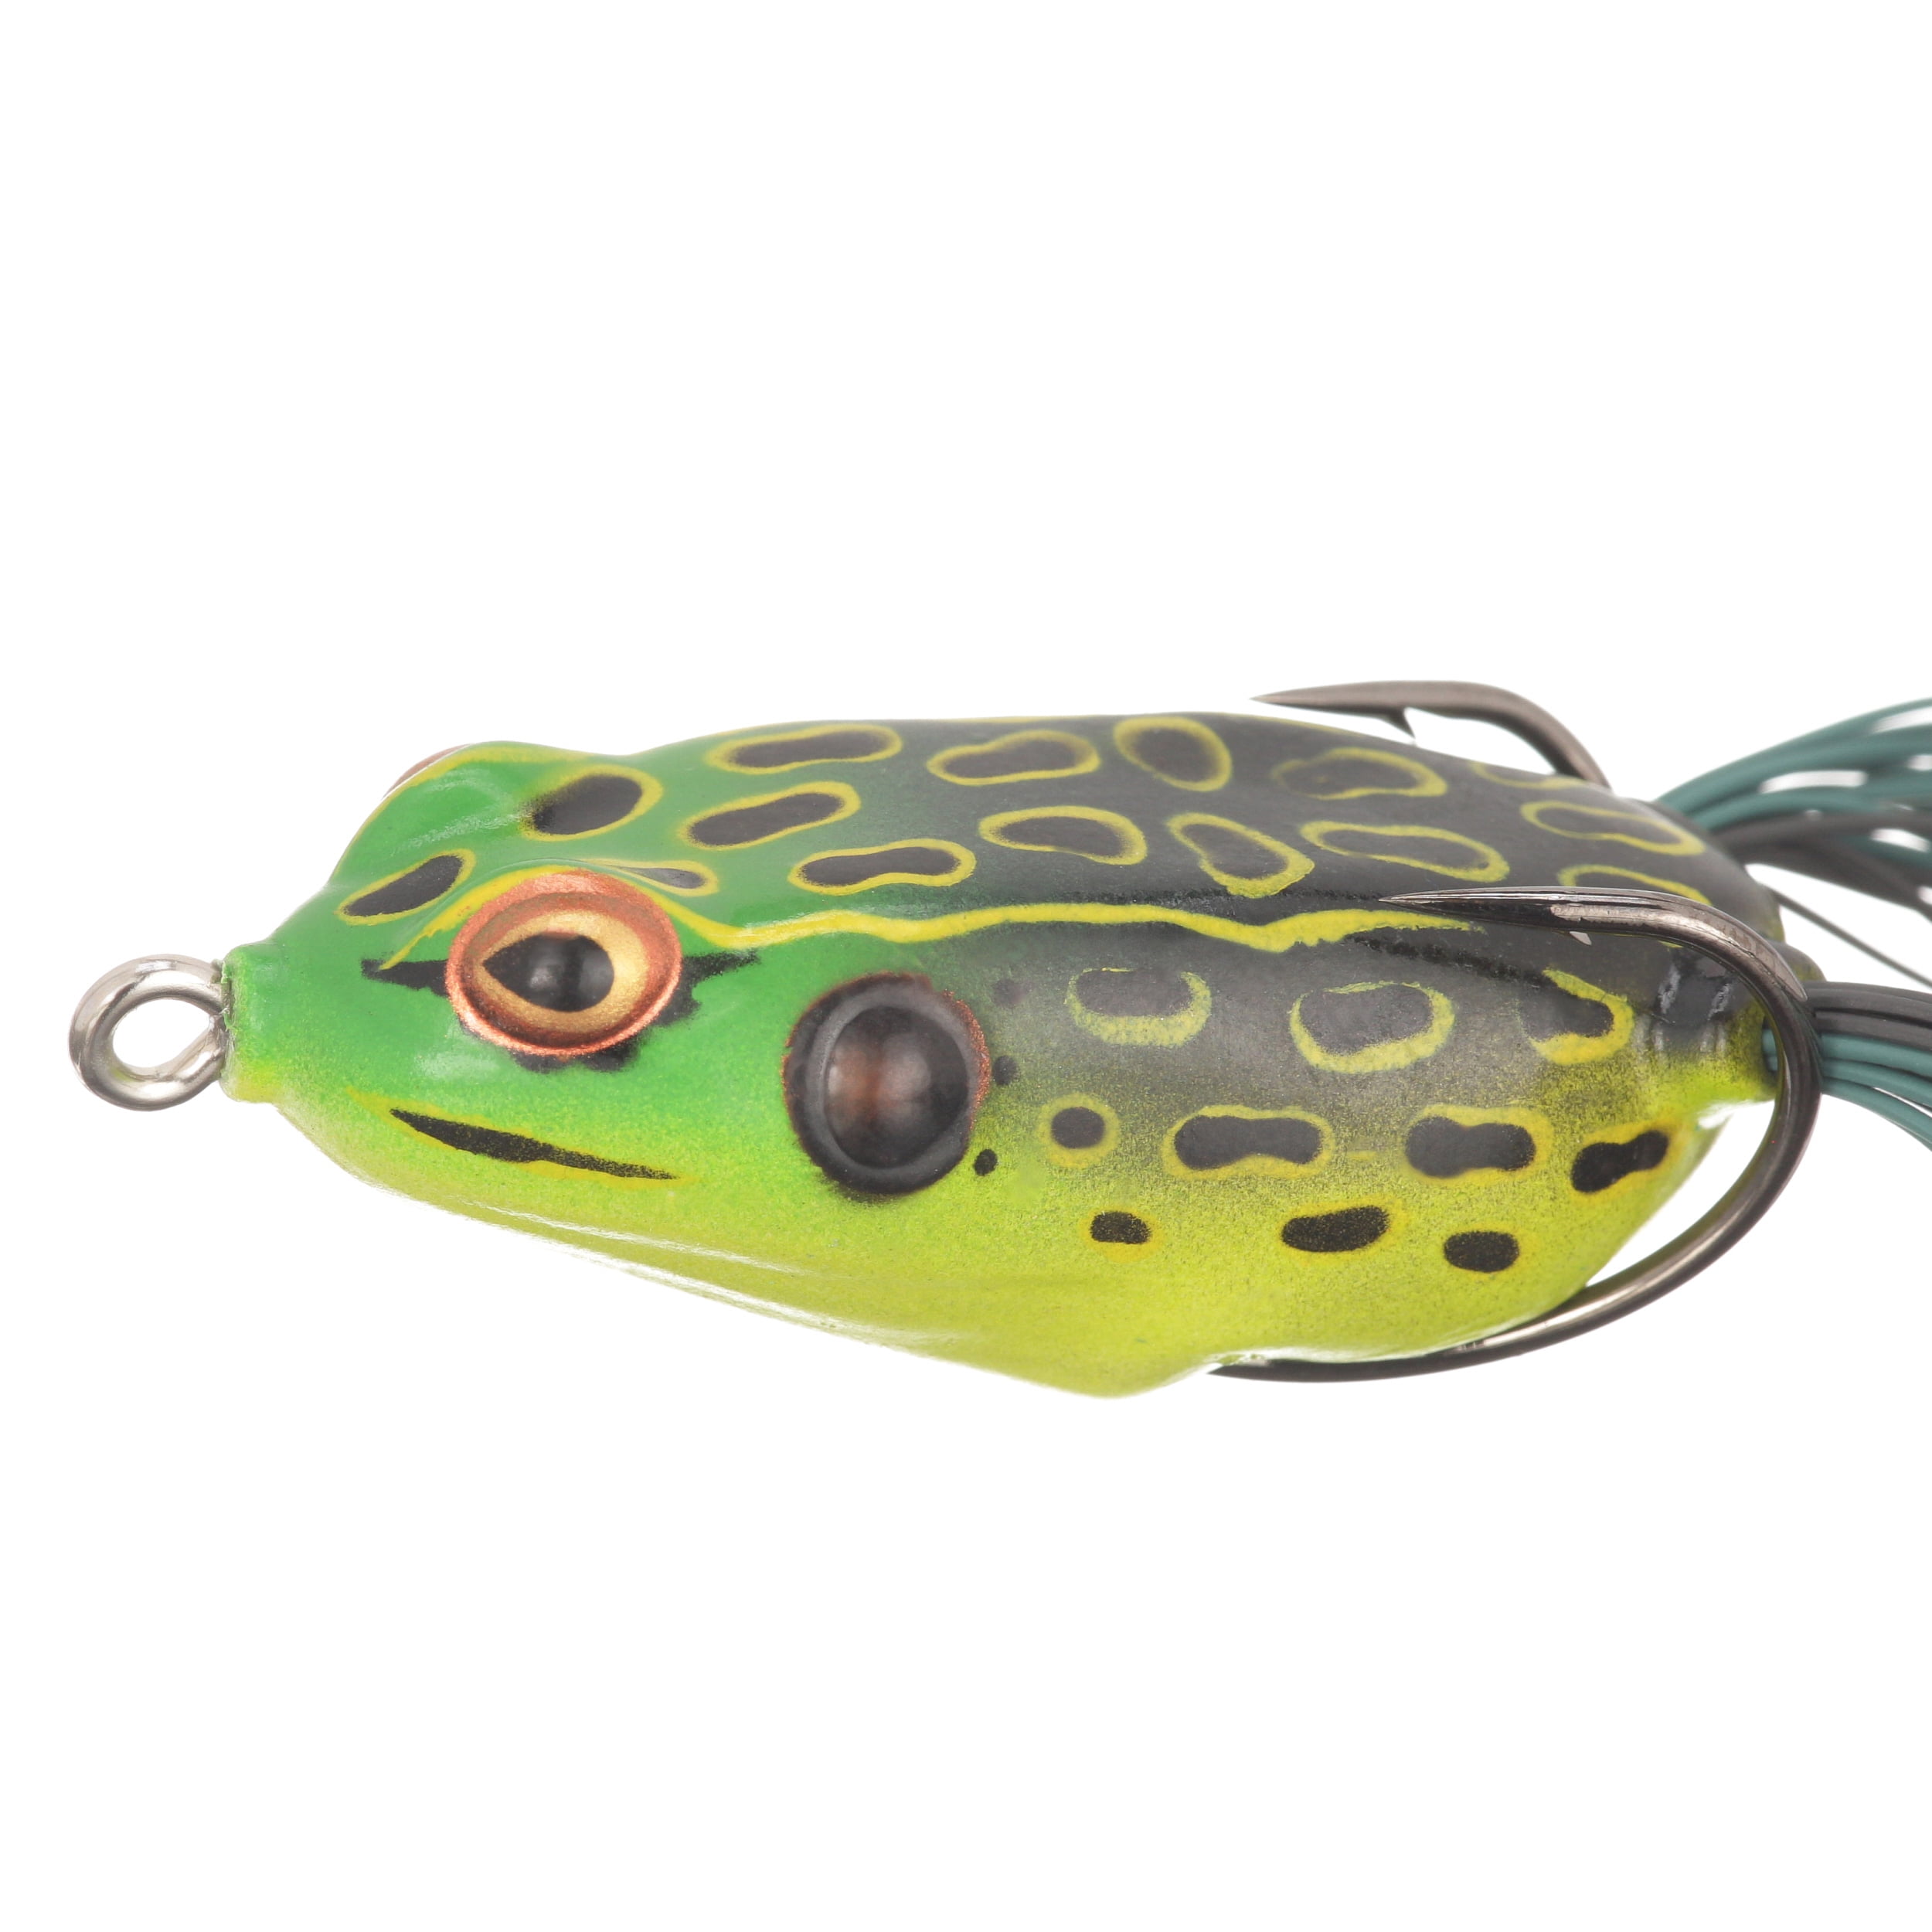 Booyah BYPC2900 Pad Crasher Jr Swamp Frog 1/4oz Soft Plastic Bass